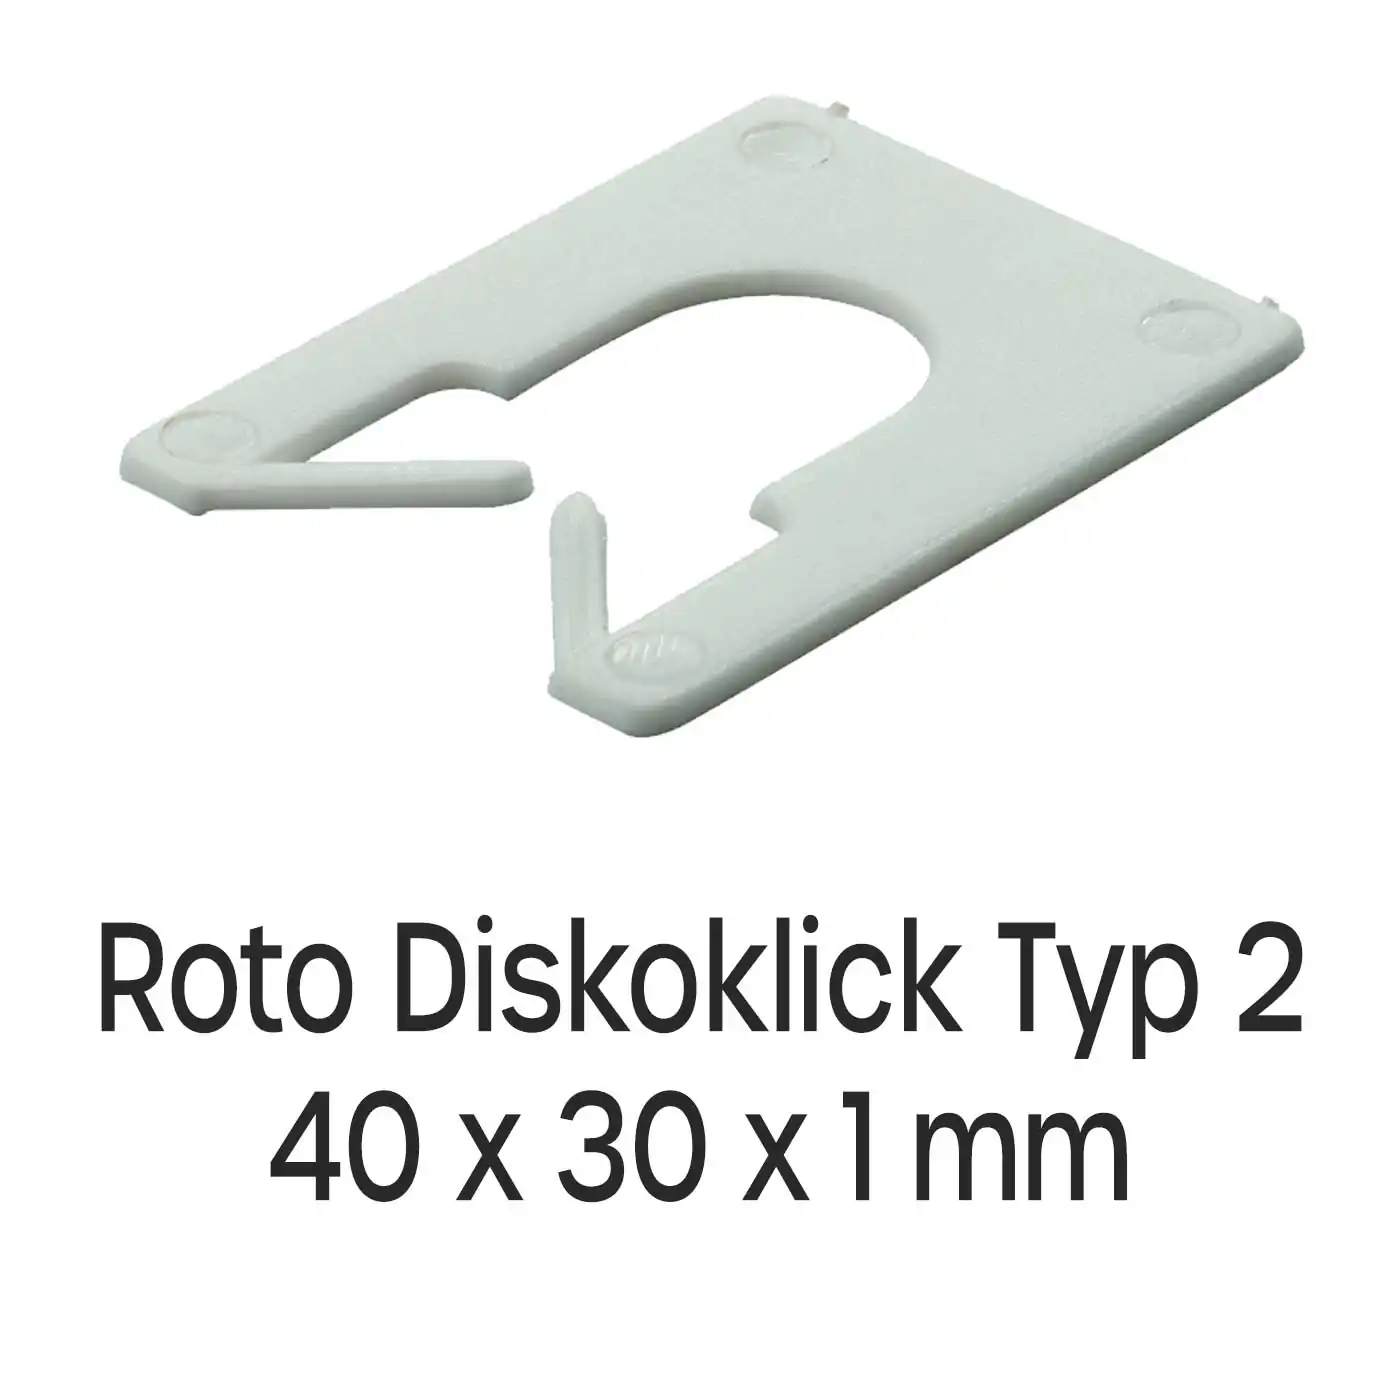 Distanzplatten Roto Diskoklick Typ 2 40 x 30 x 1 mm 1000 Stück